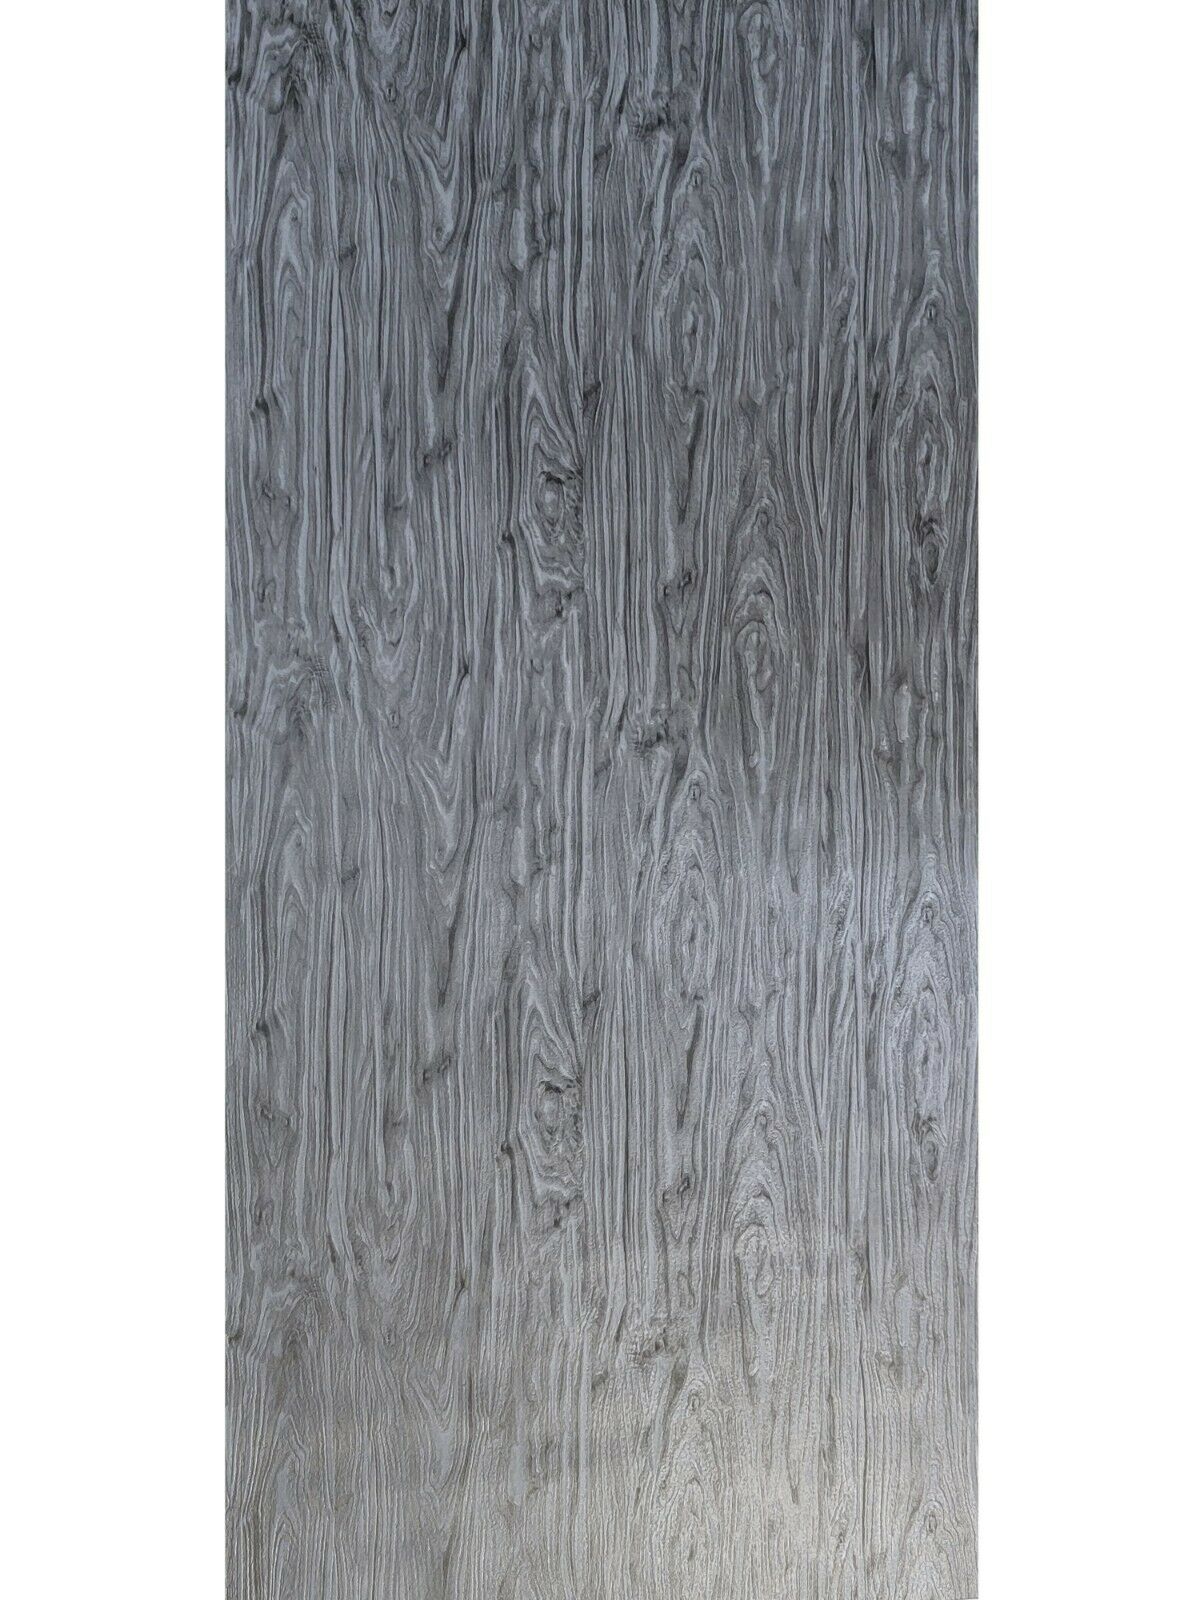 Z3428 Zambaiti Charcoal Gray Silver metallic faux wood textures 